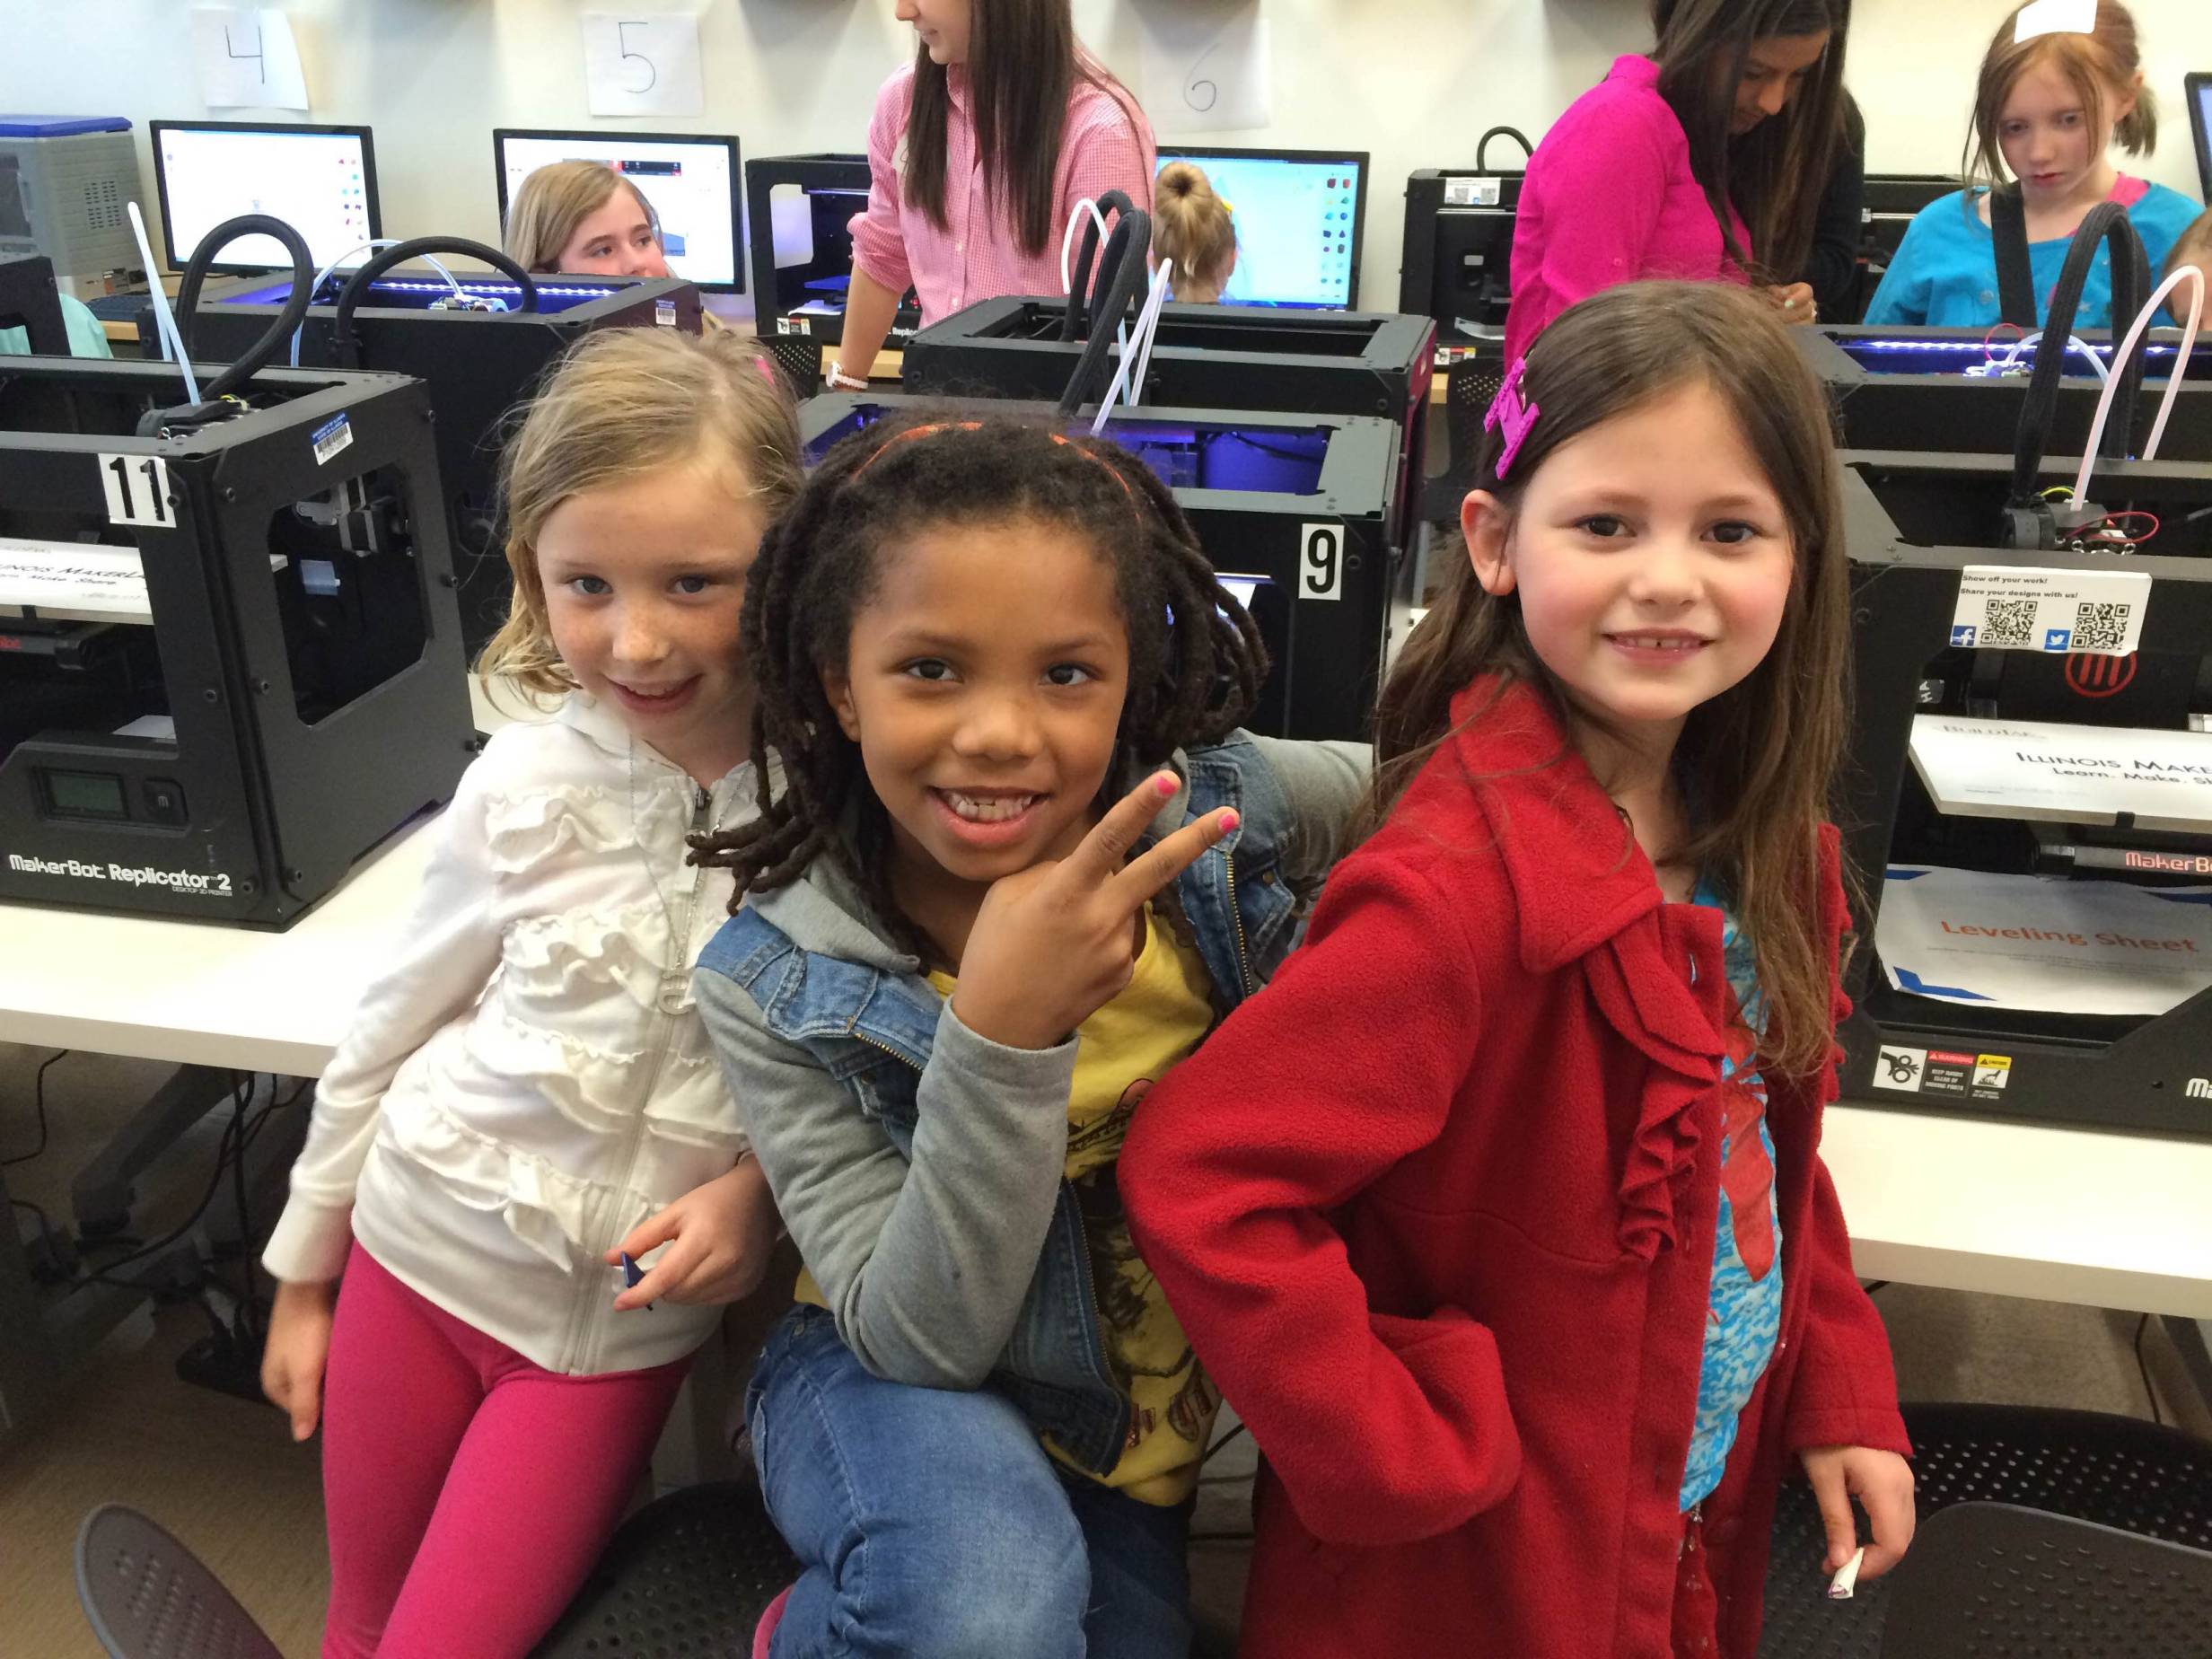 MakerGirl teaches young girls STEM skills